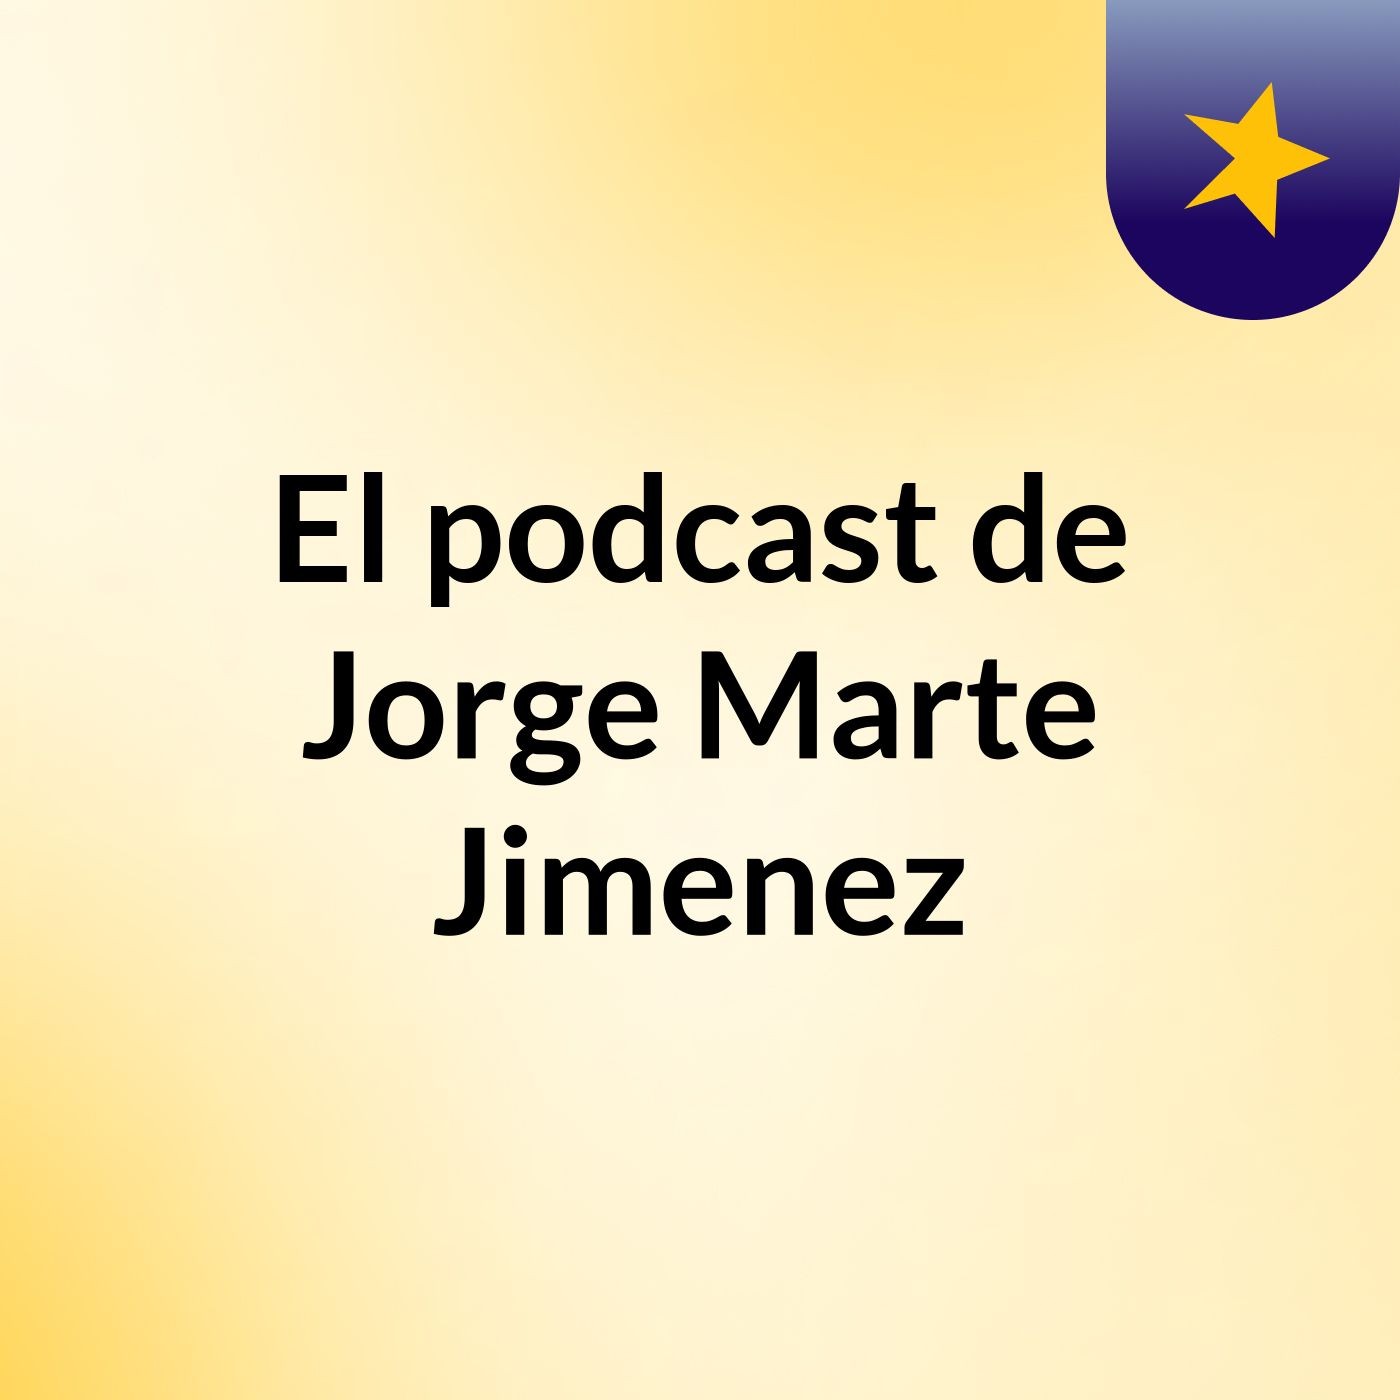 El podcast de Jorge Marte Jimenez